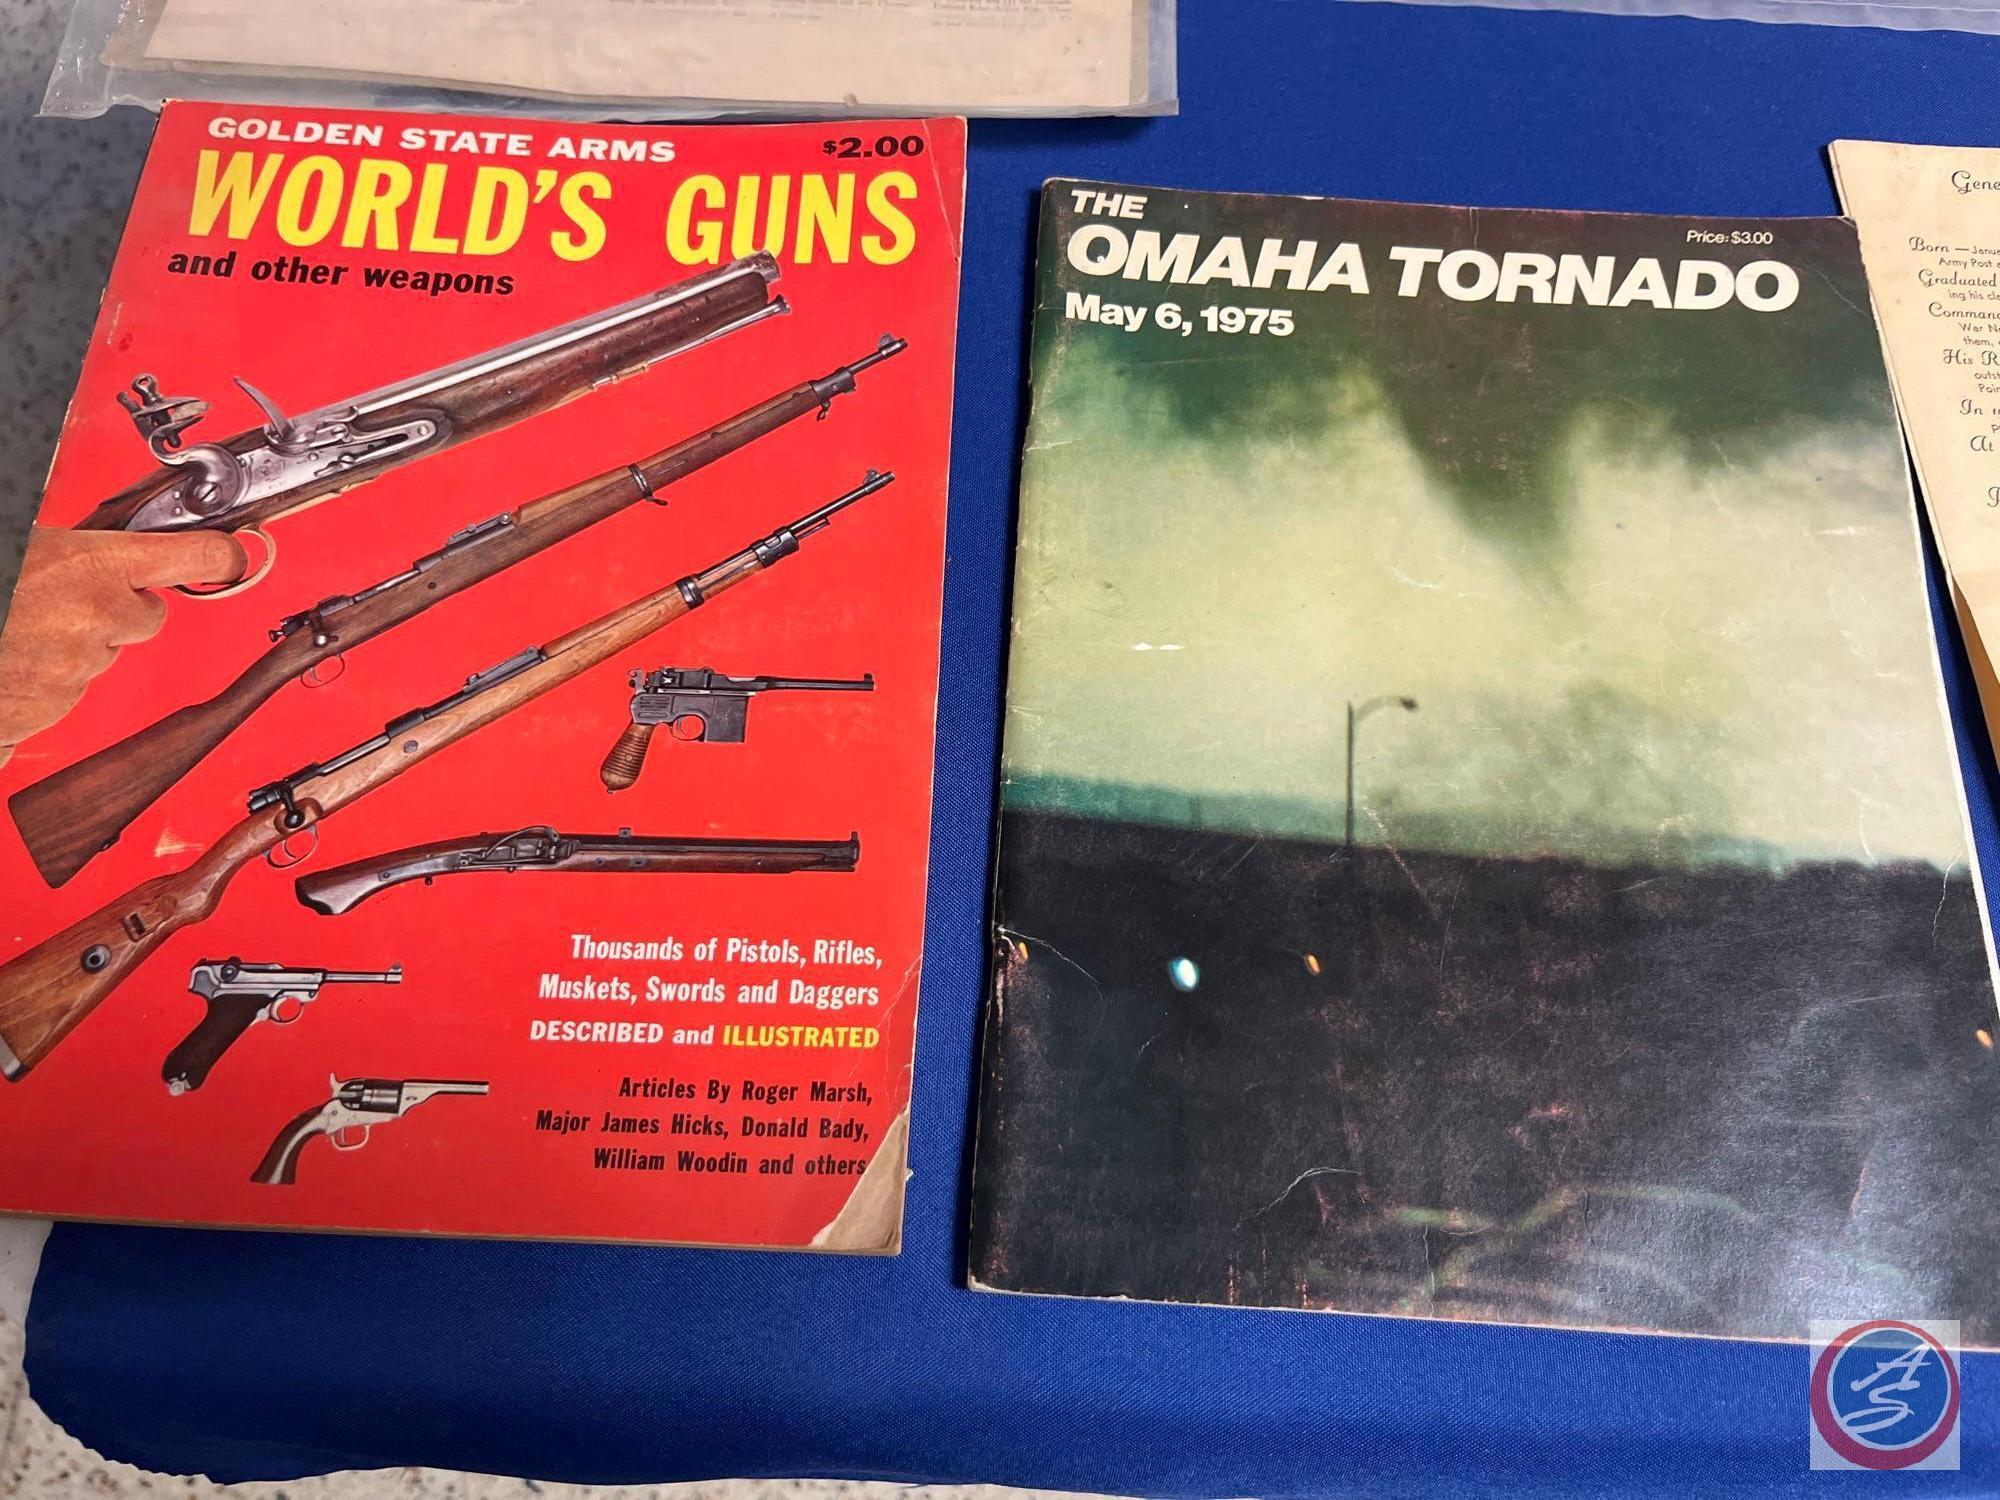 Vintage Chevrolet Print Ad, Vintage Golden State Arms World's Guns Magazine, Vintage Omaha Tornado